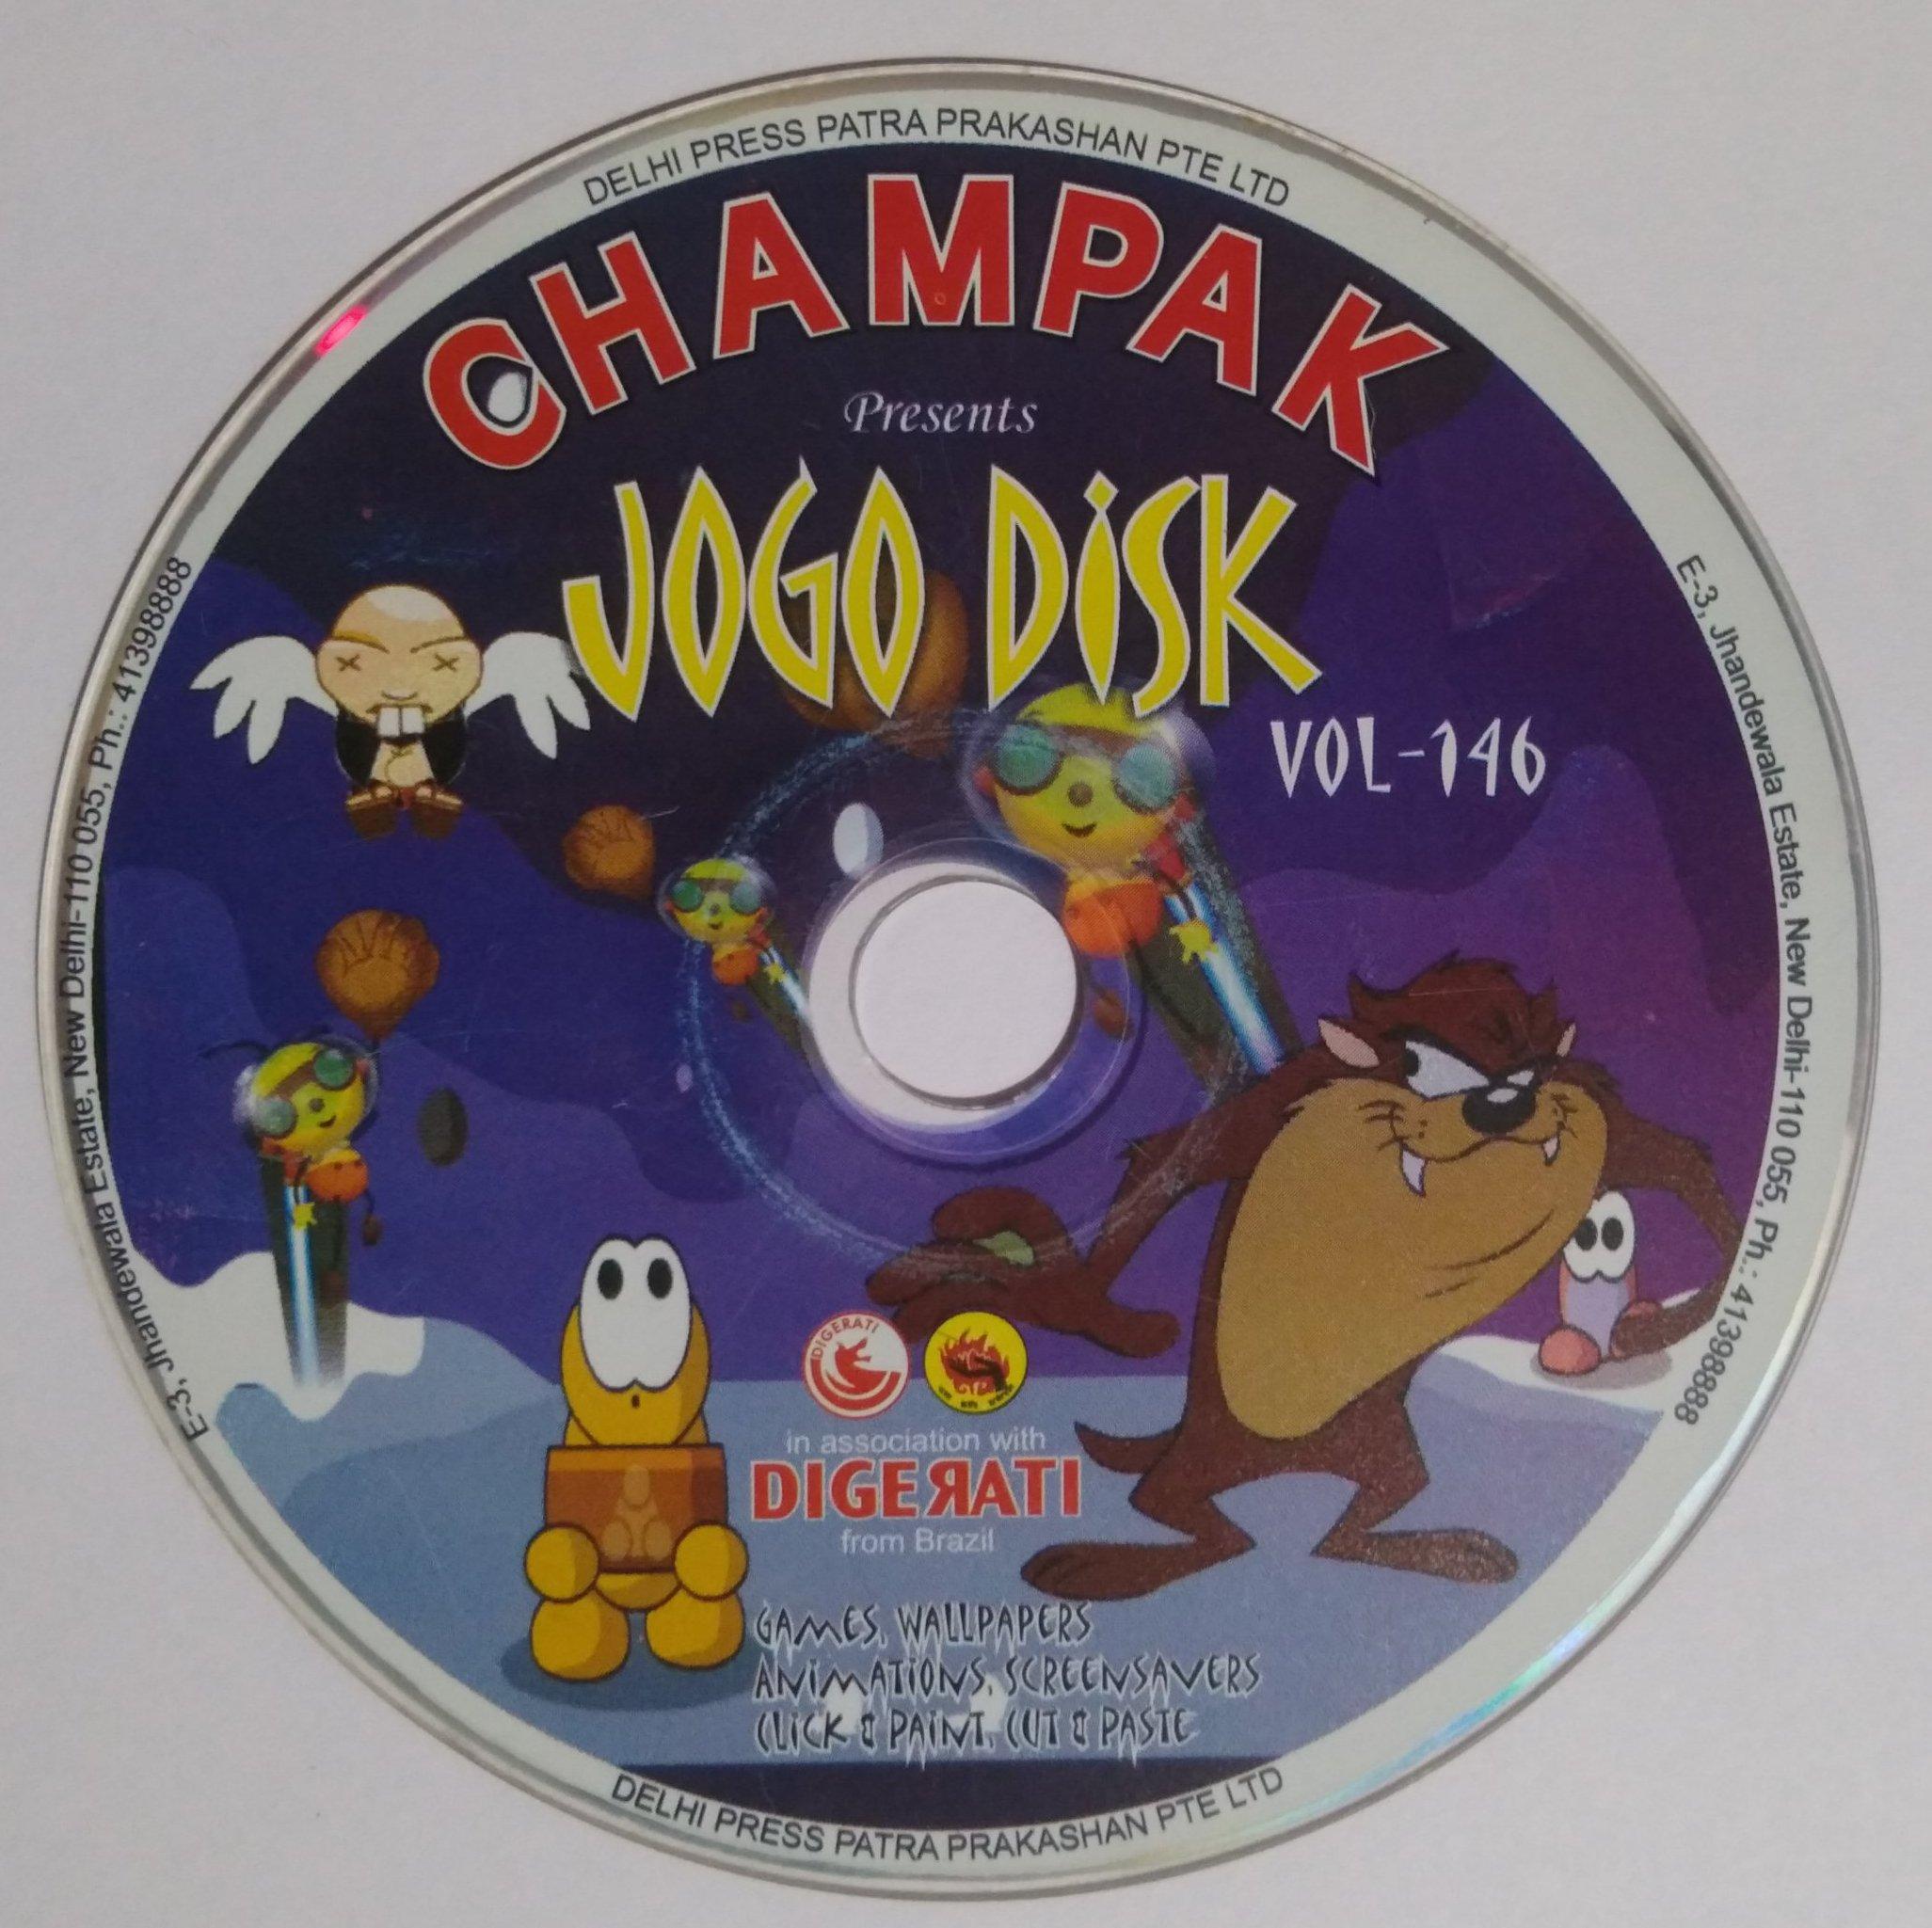 Champak/Digerati Jogo Disk Volume 146 : Free Download, Borrow, and